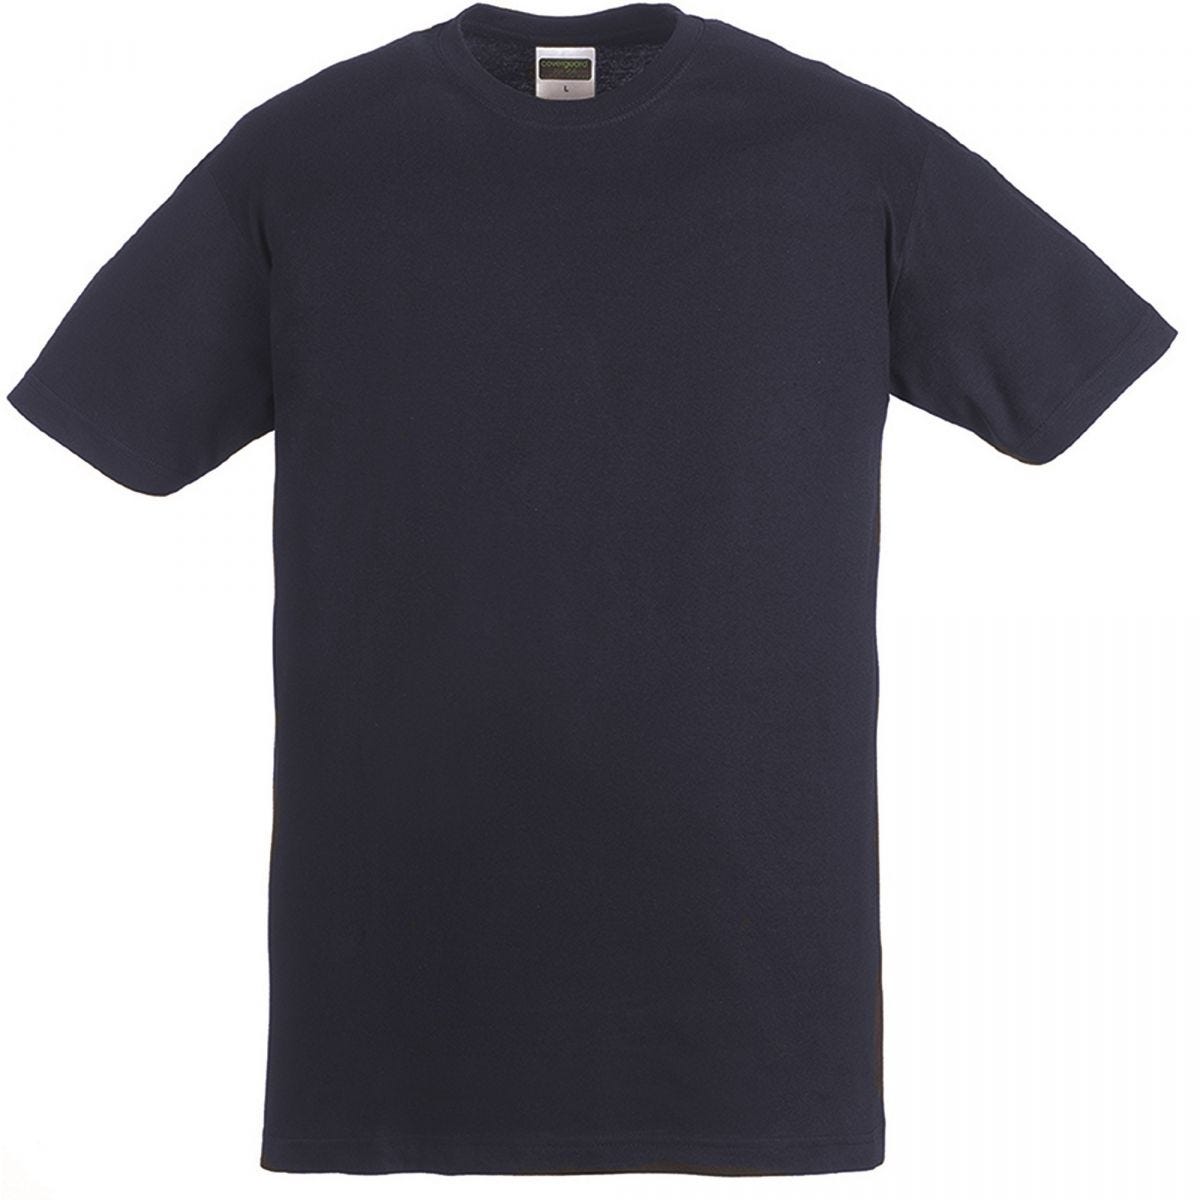 HIKE T-shirt MC marine, 100% coton, 190g/m² - COVERGUARD - Taille S 0